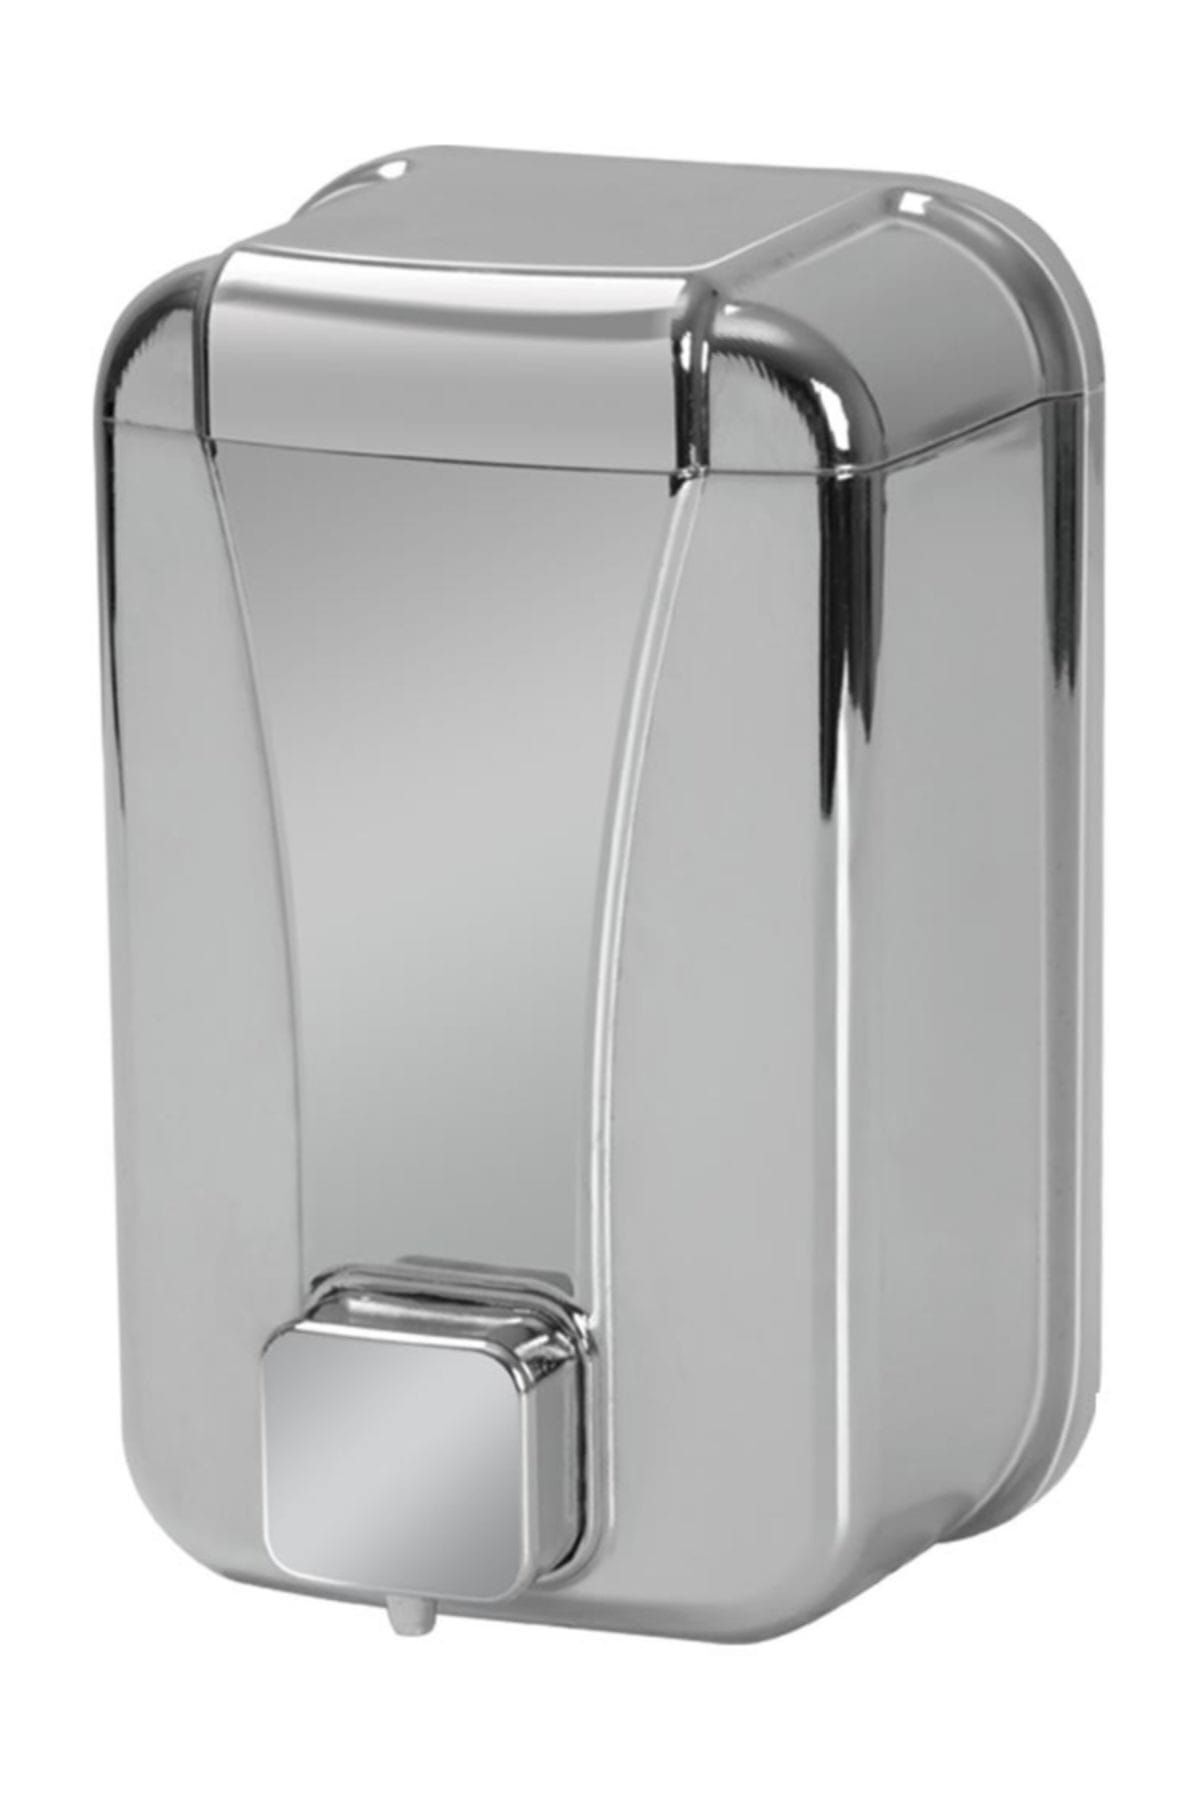 Alper Banyo 3420-K Sıvı Sabun Dispenserleri 500 Cc. Krom ( Plastik )